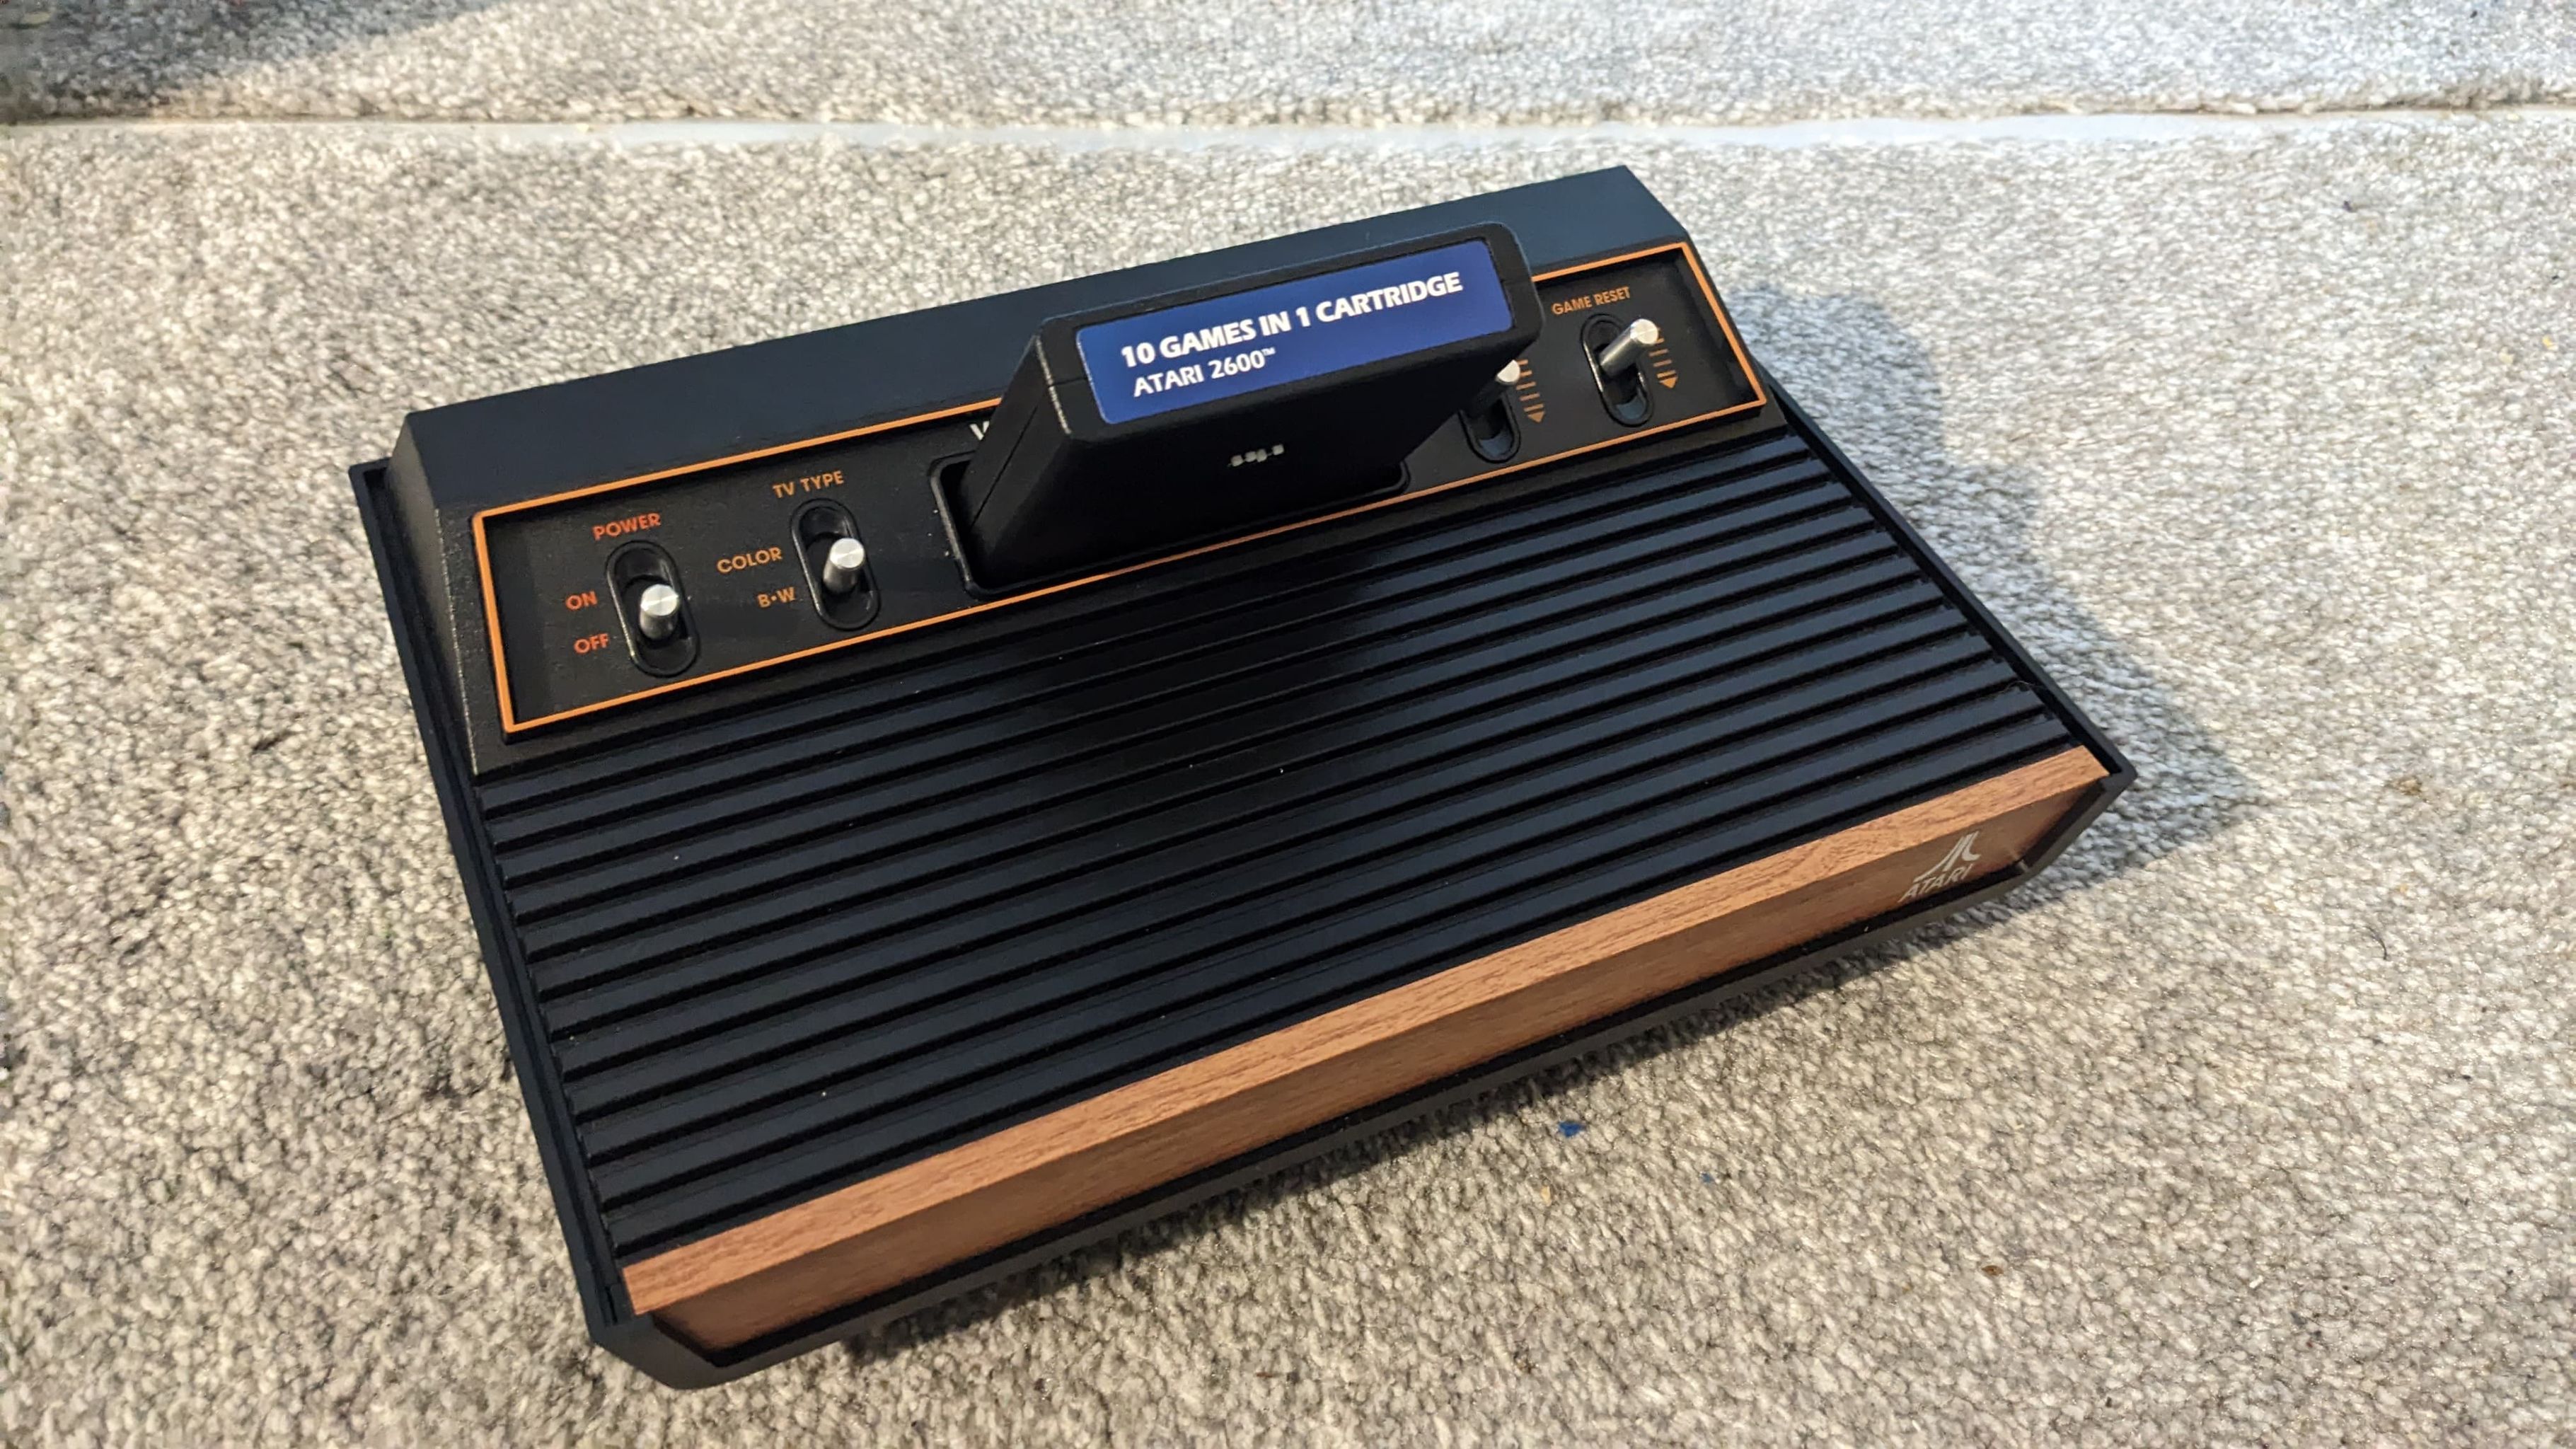 Atari 2600 Plus review: retro analogue design makes an almost